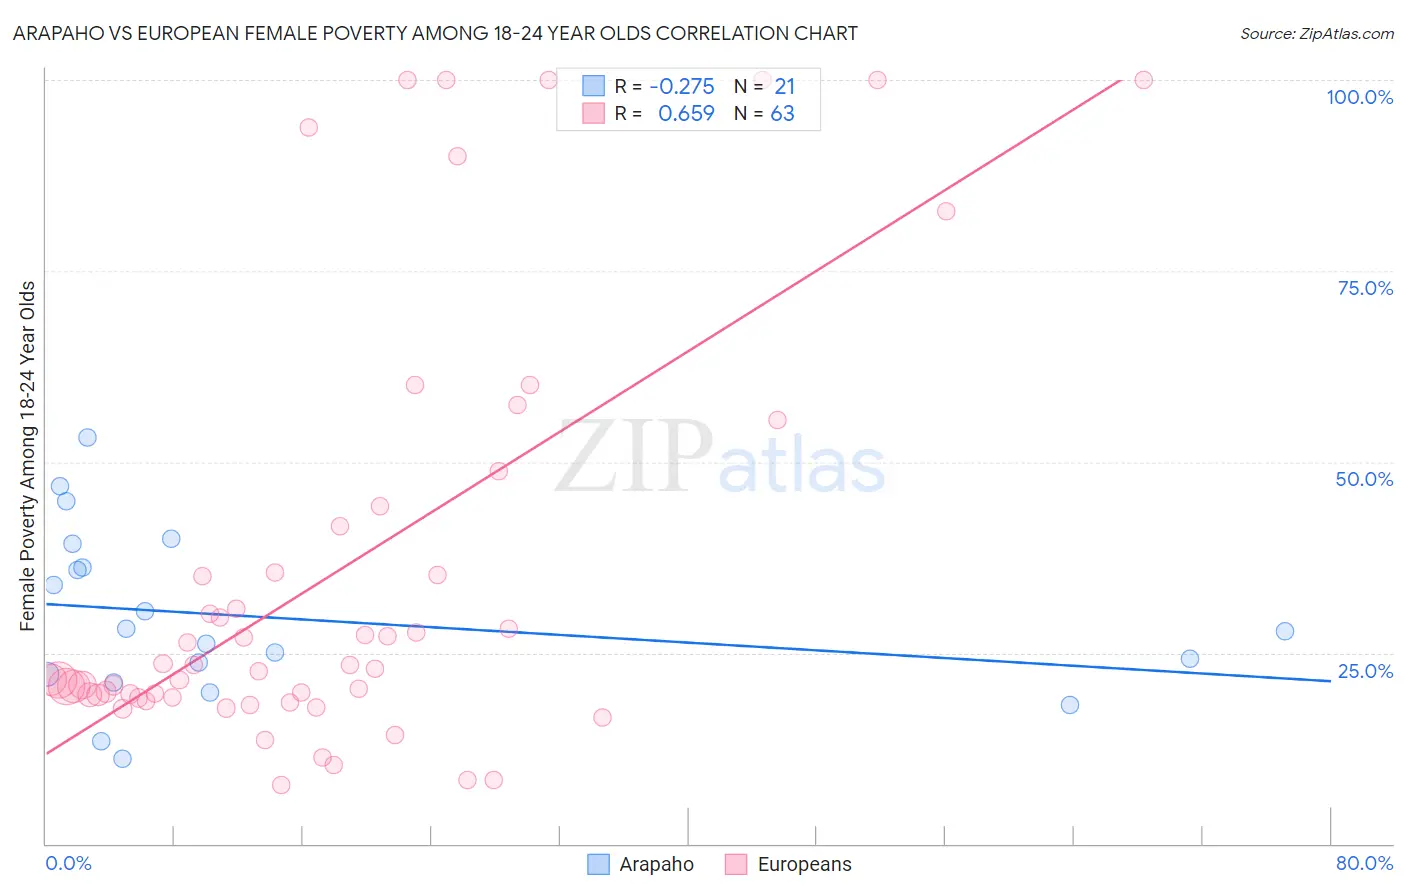 Arapaho vs European Female Poverty Among 18-24 Year Olds